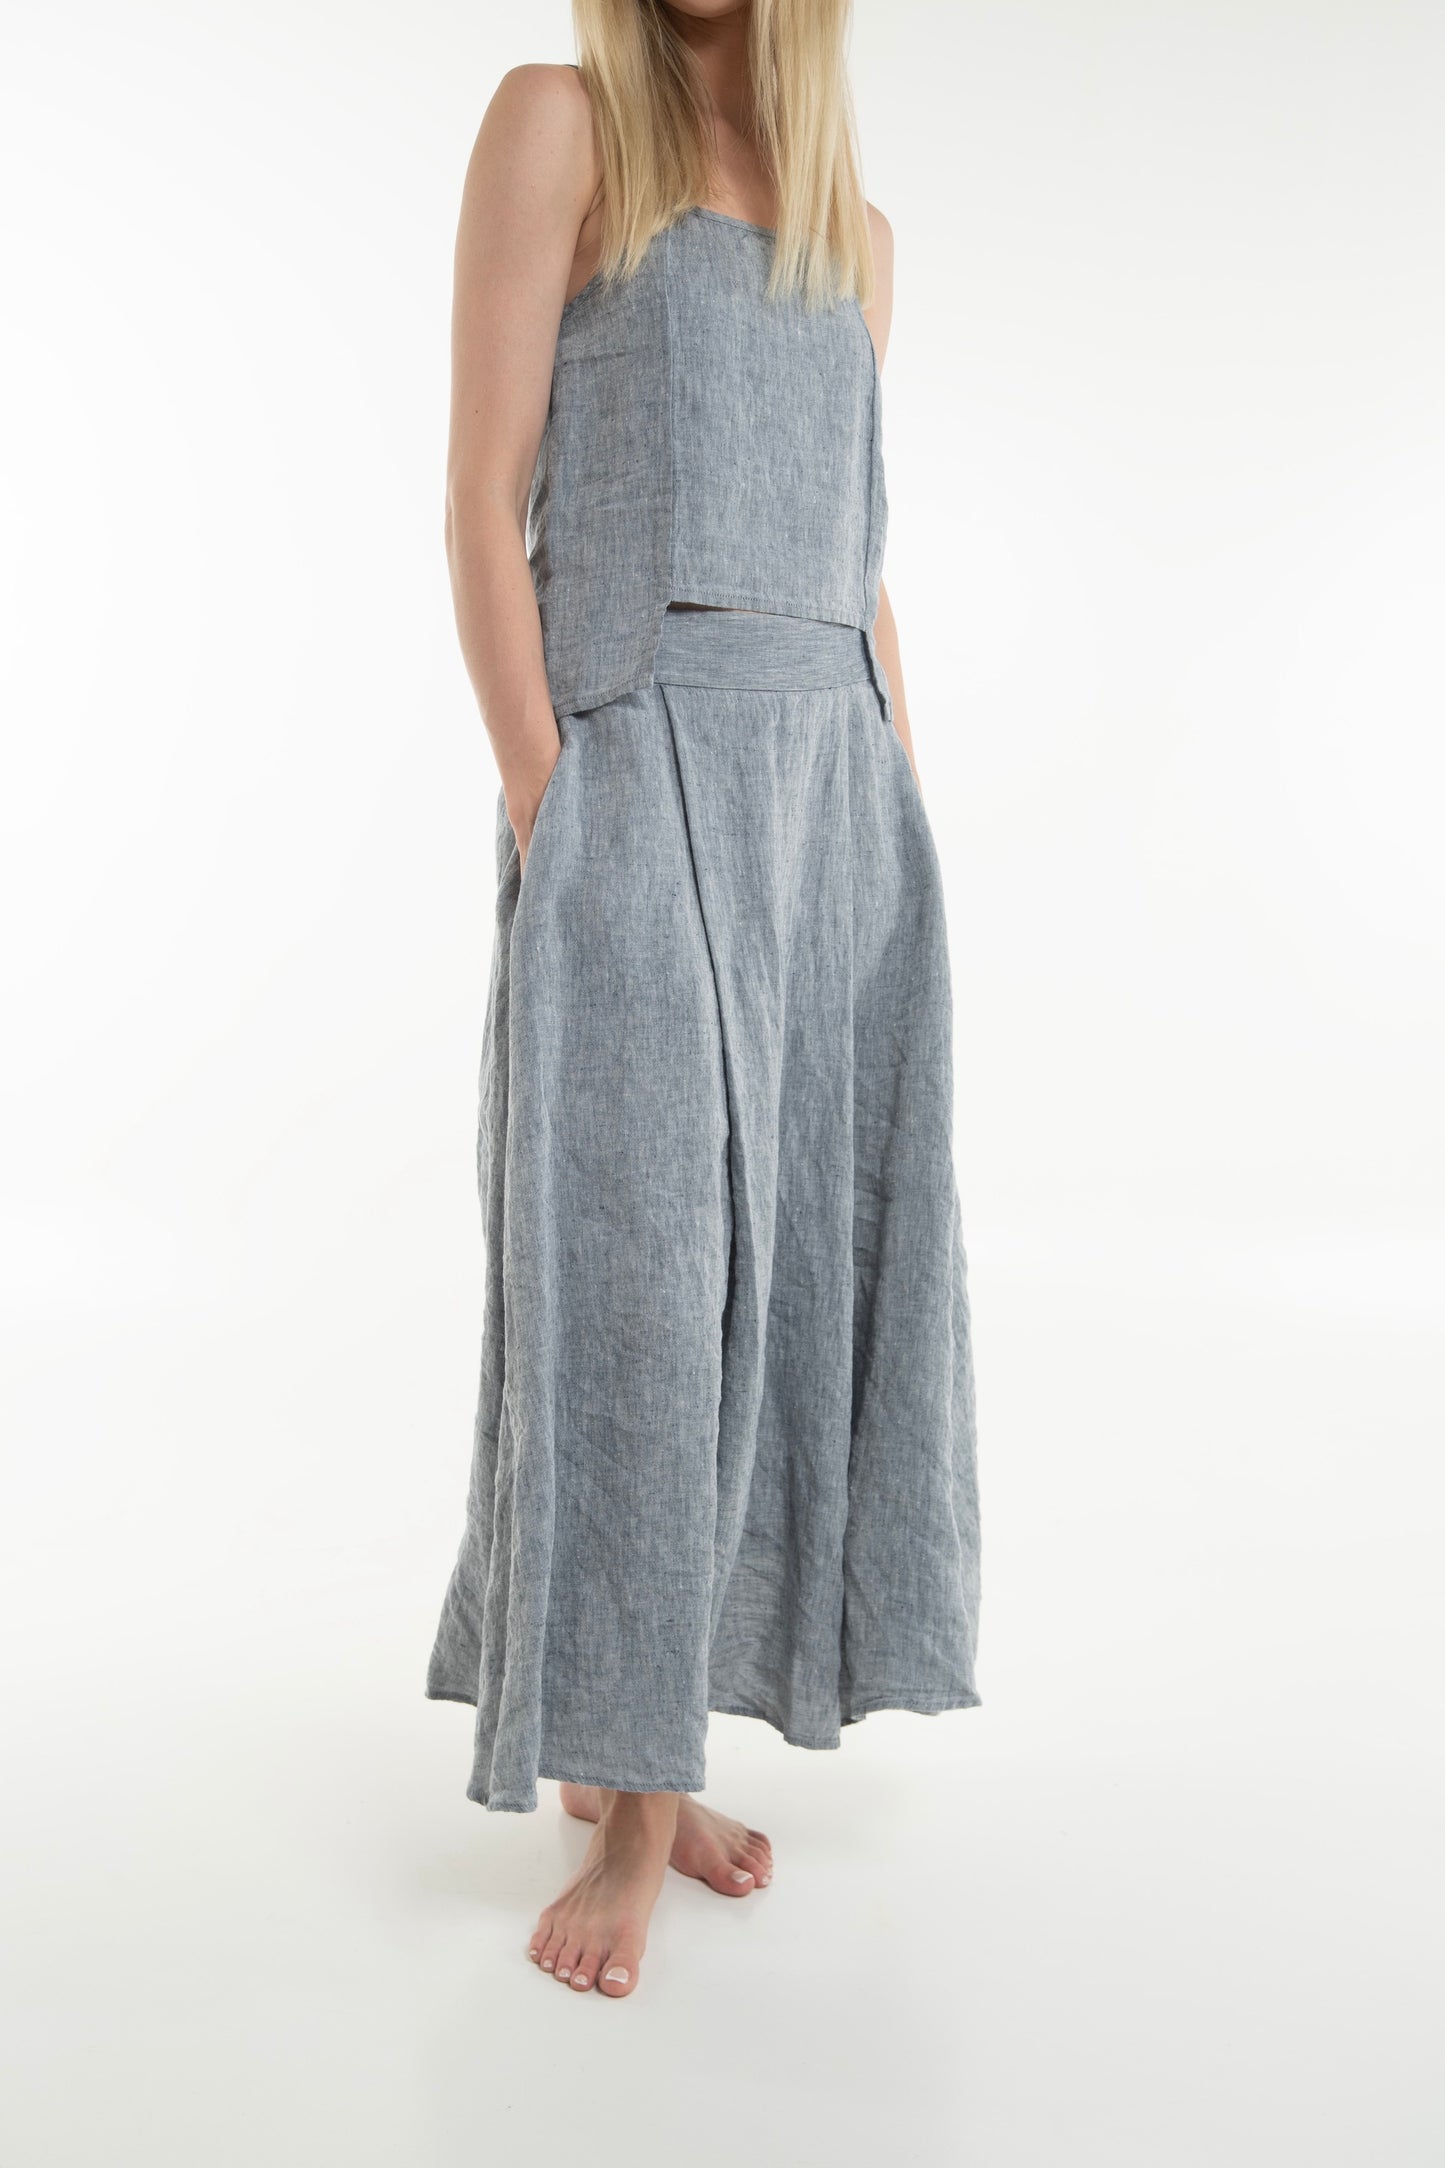 Atsui Woman Skirt Ash Grey - Unisex